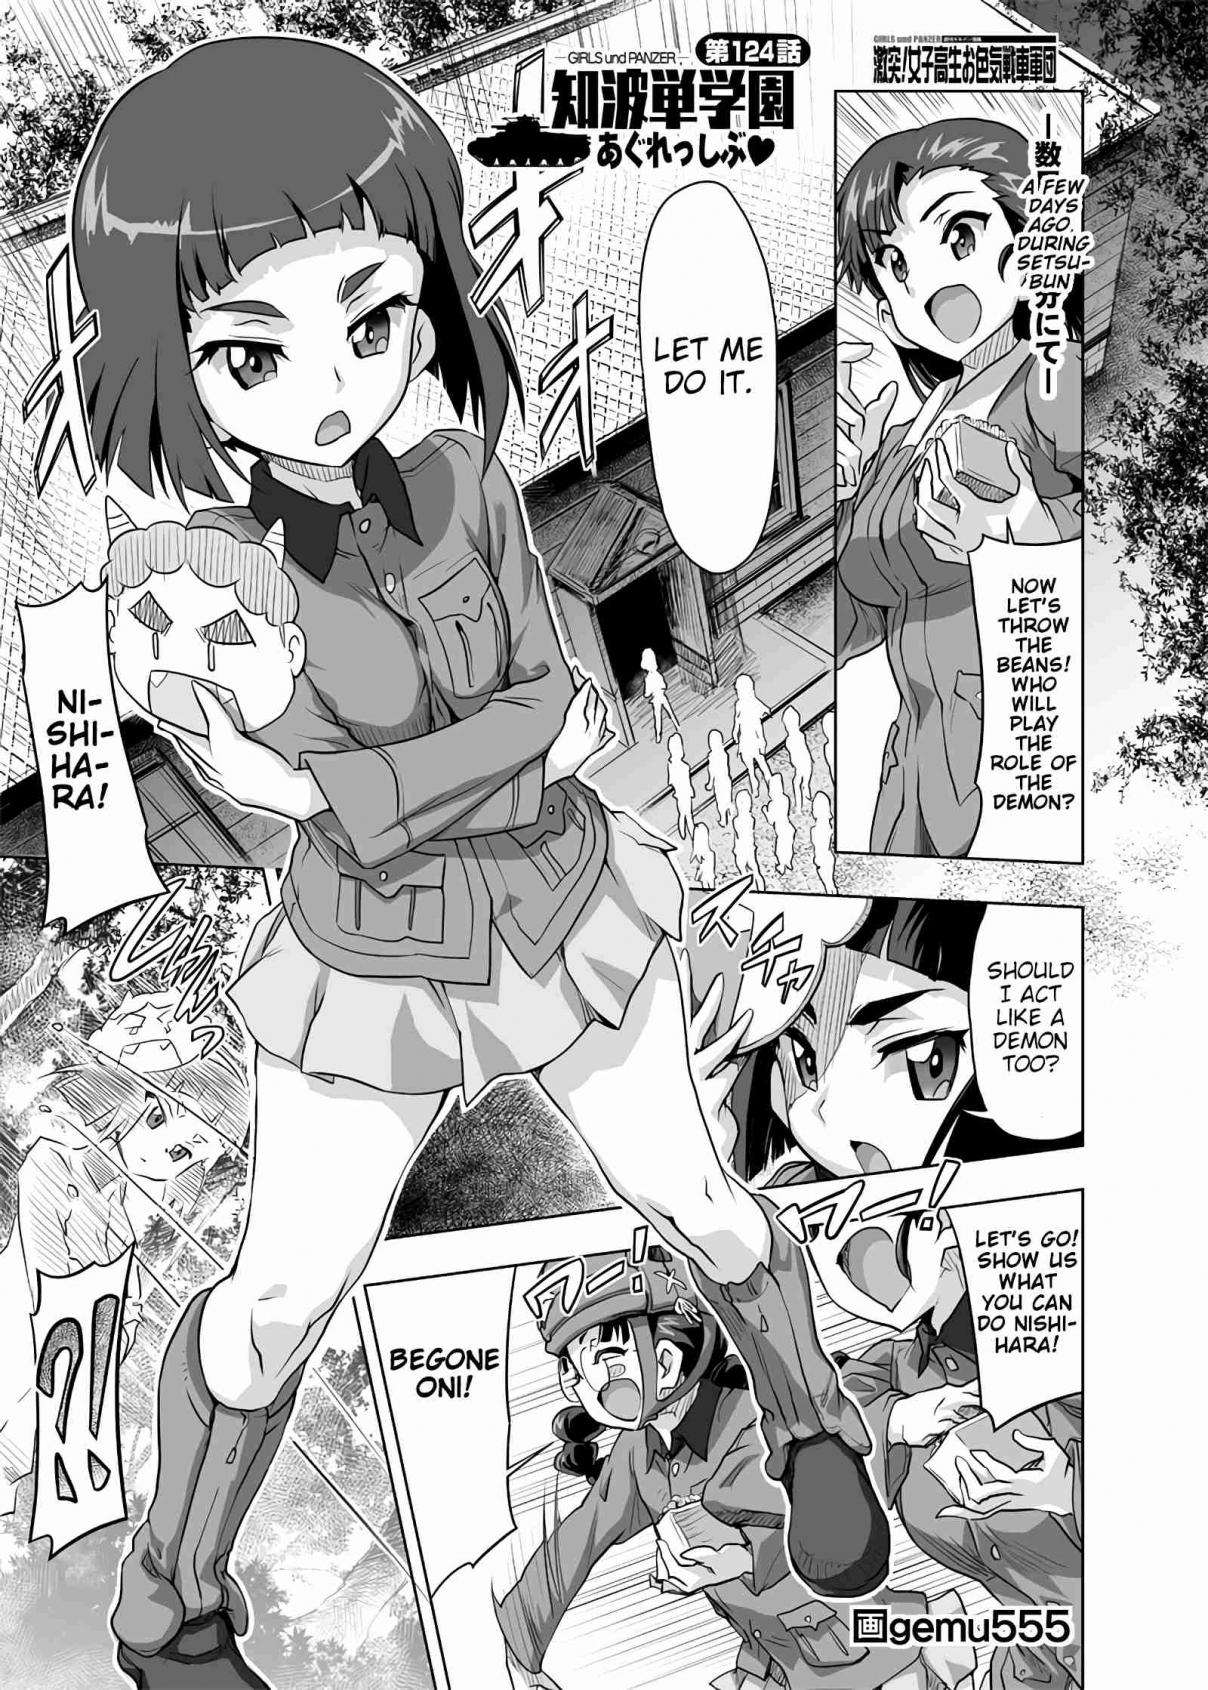 Girls und Panzer Chi HaTan Academy Aggressive (Doujinshi) Vol. 1 Ch. 124